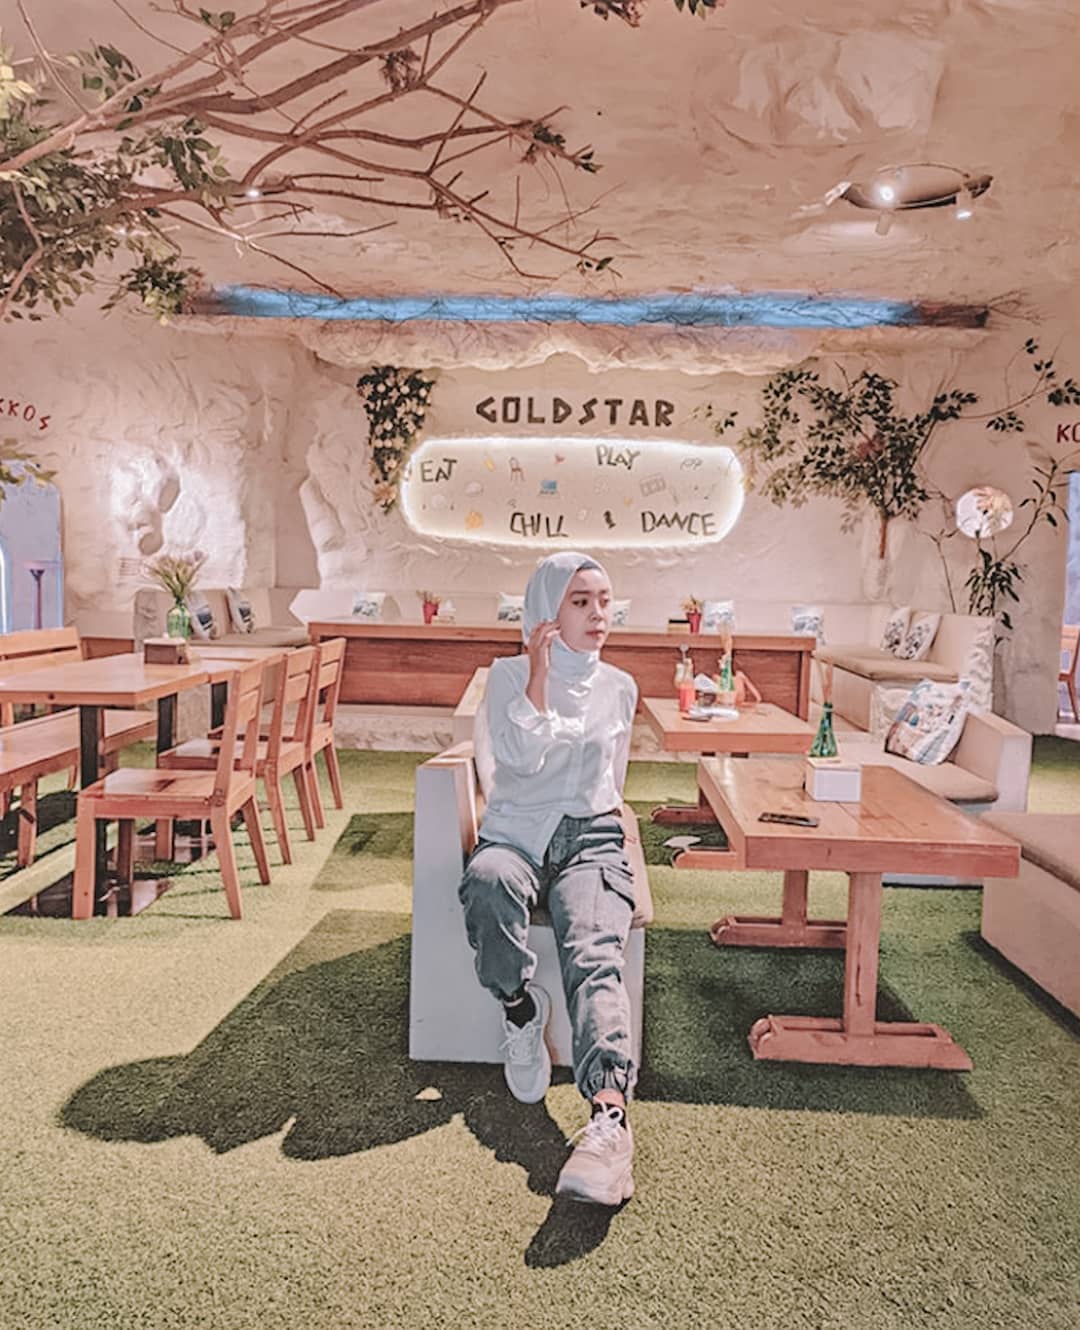 Berfoto Di Goldstar 360 Cafe Image From @tasyans26